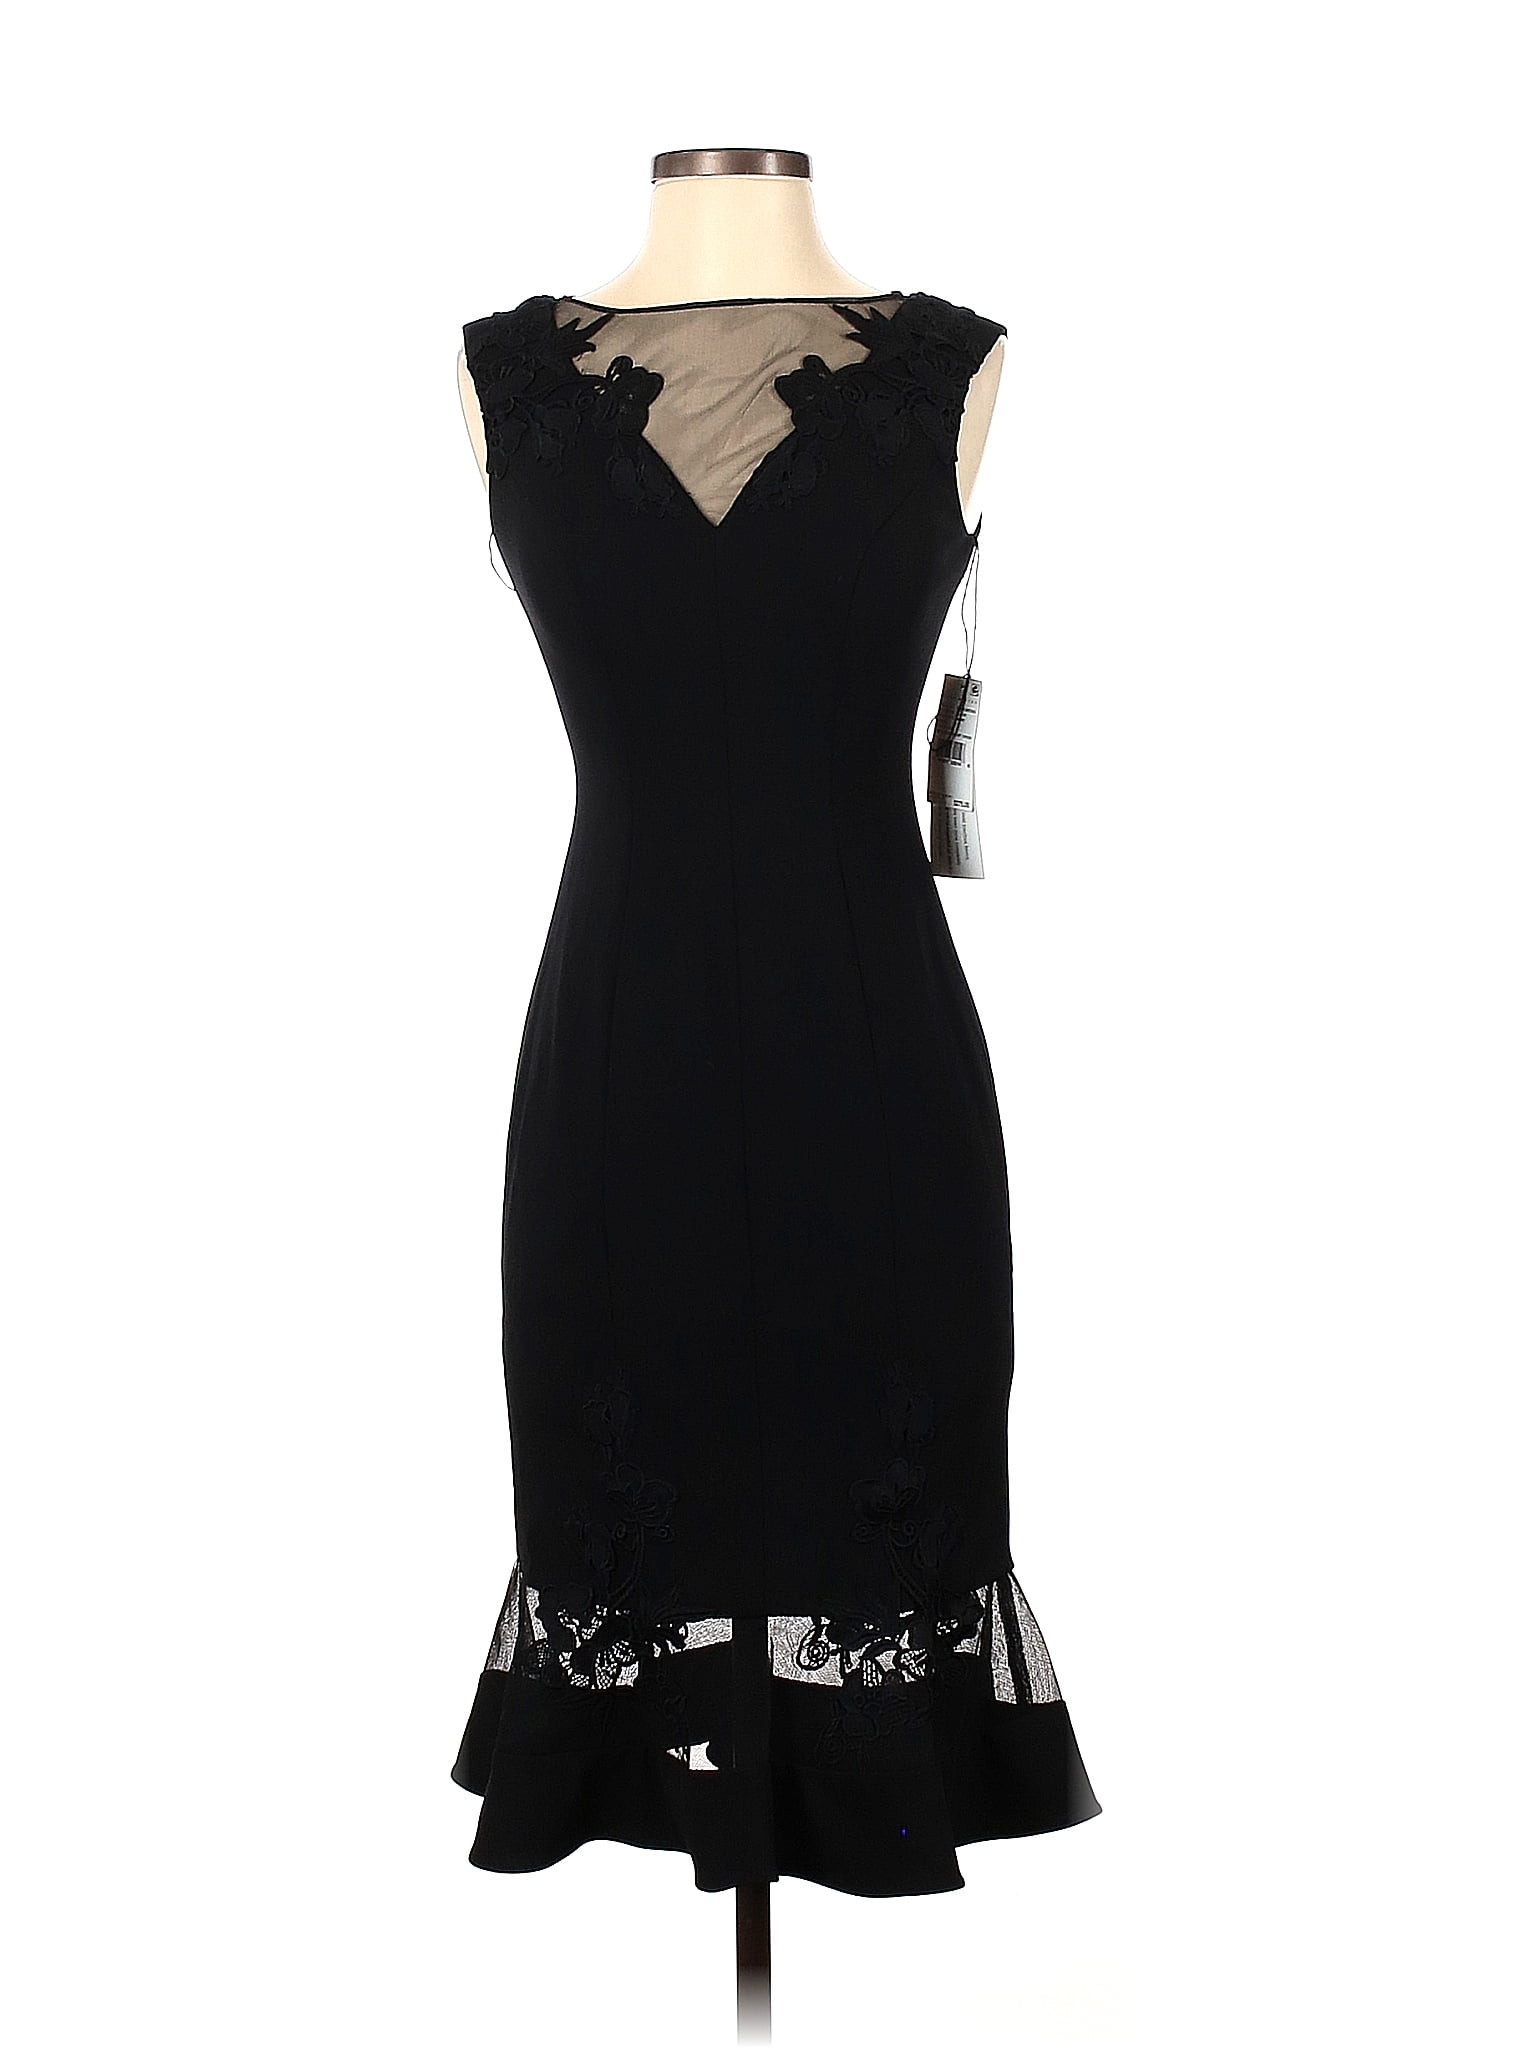 Aidan Mattox Solid Black Cocktail Dress Size 0 - 80% off | ThredUp